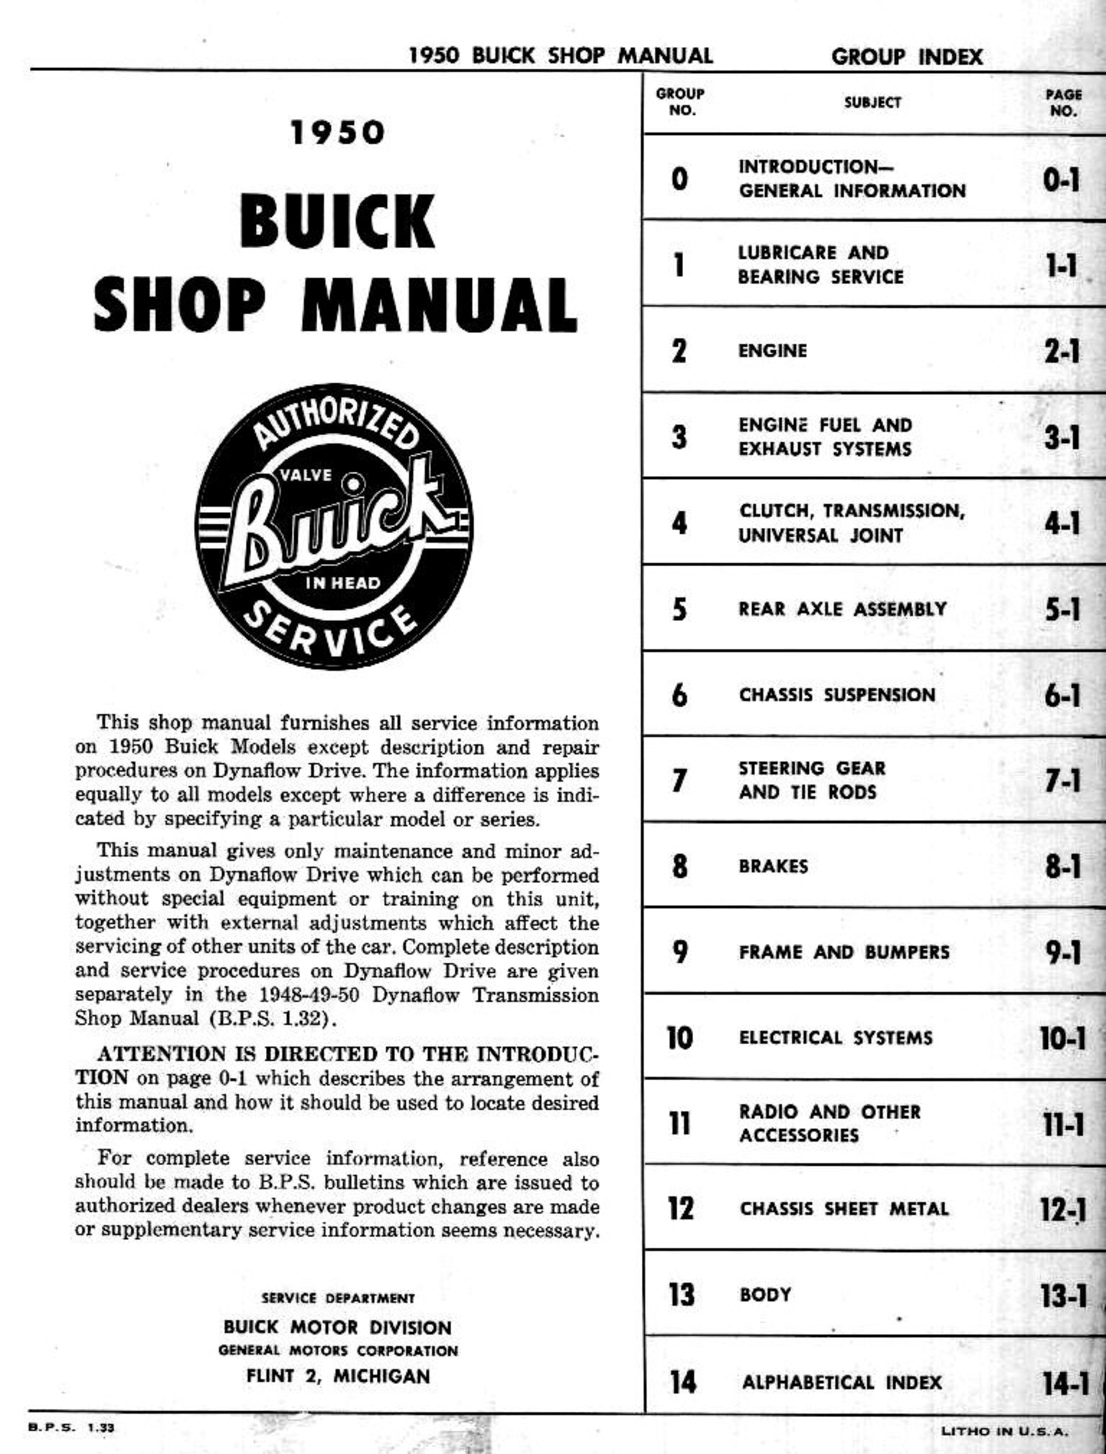 n_01 1950 Buick Shop Manual - Gen Information-001-001.jpg